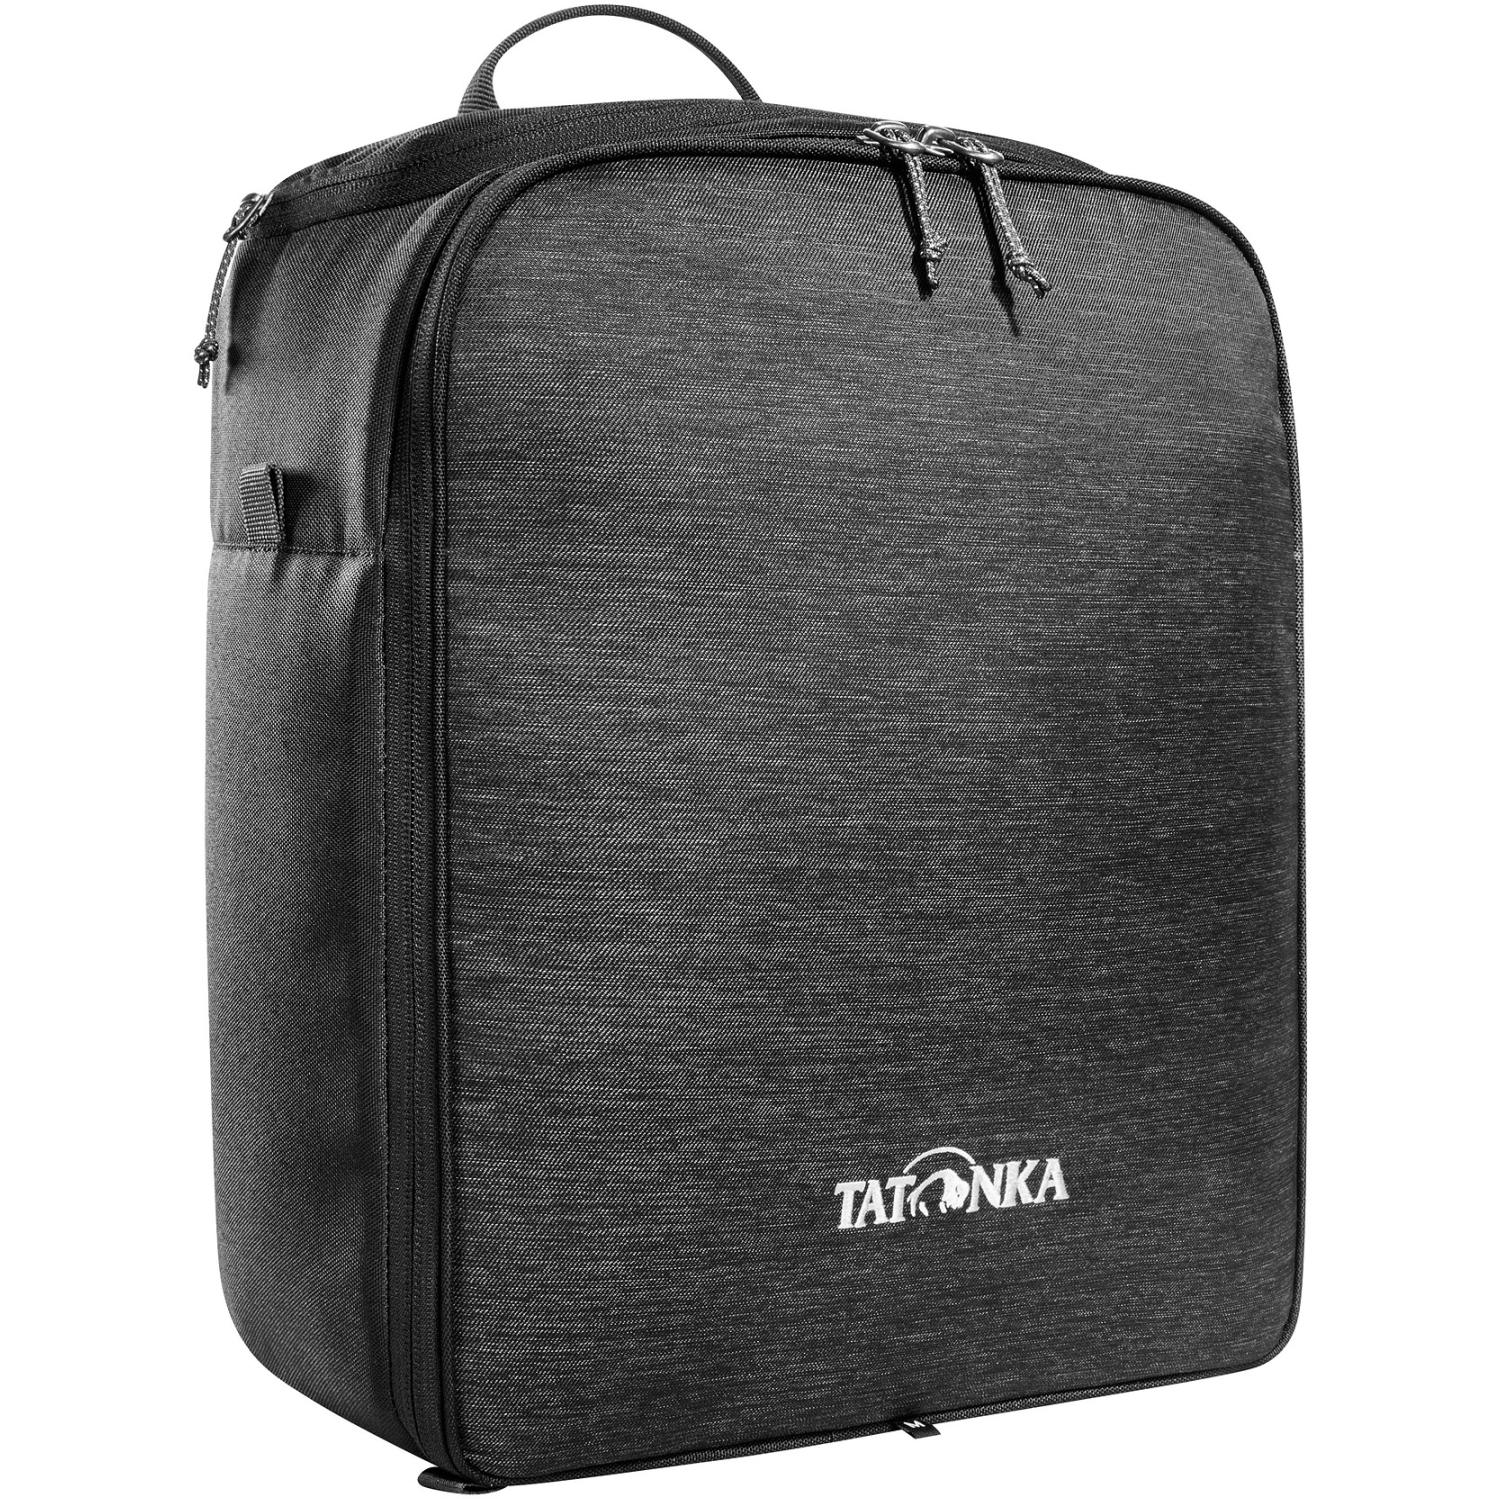 Picture of Tatonka Cooler Bag M - off black